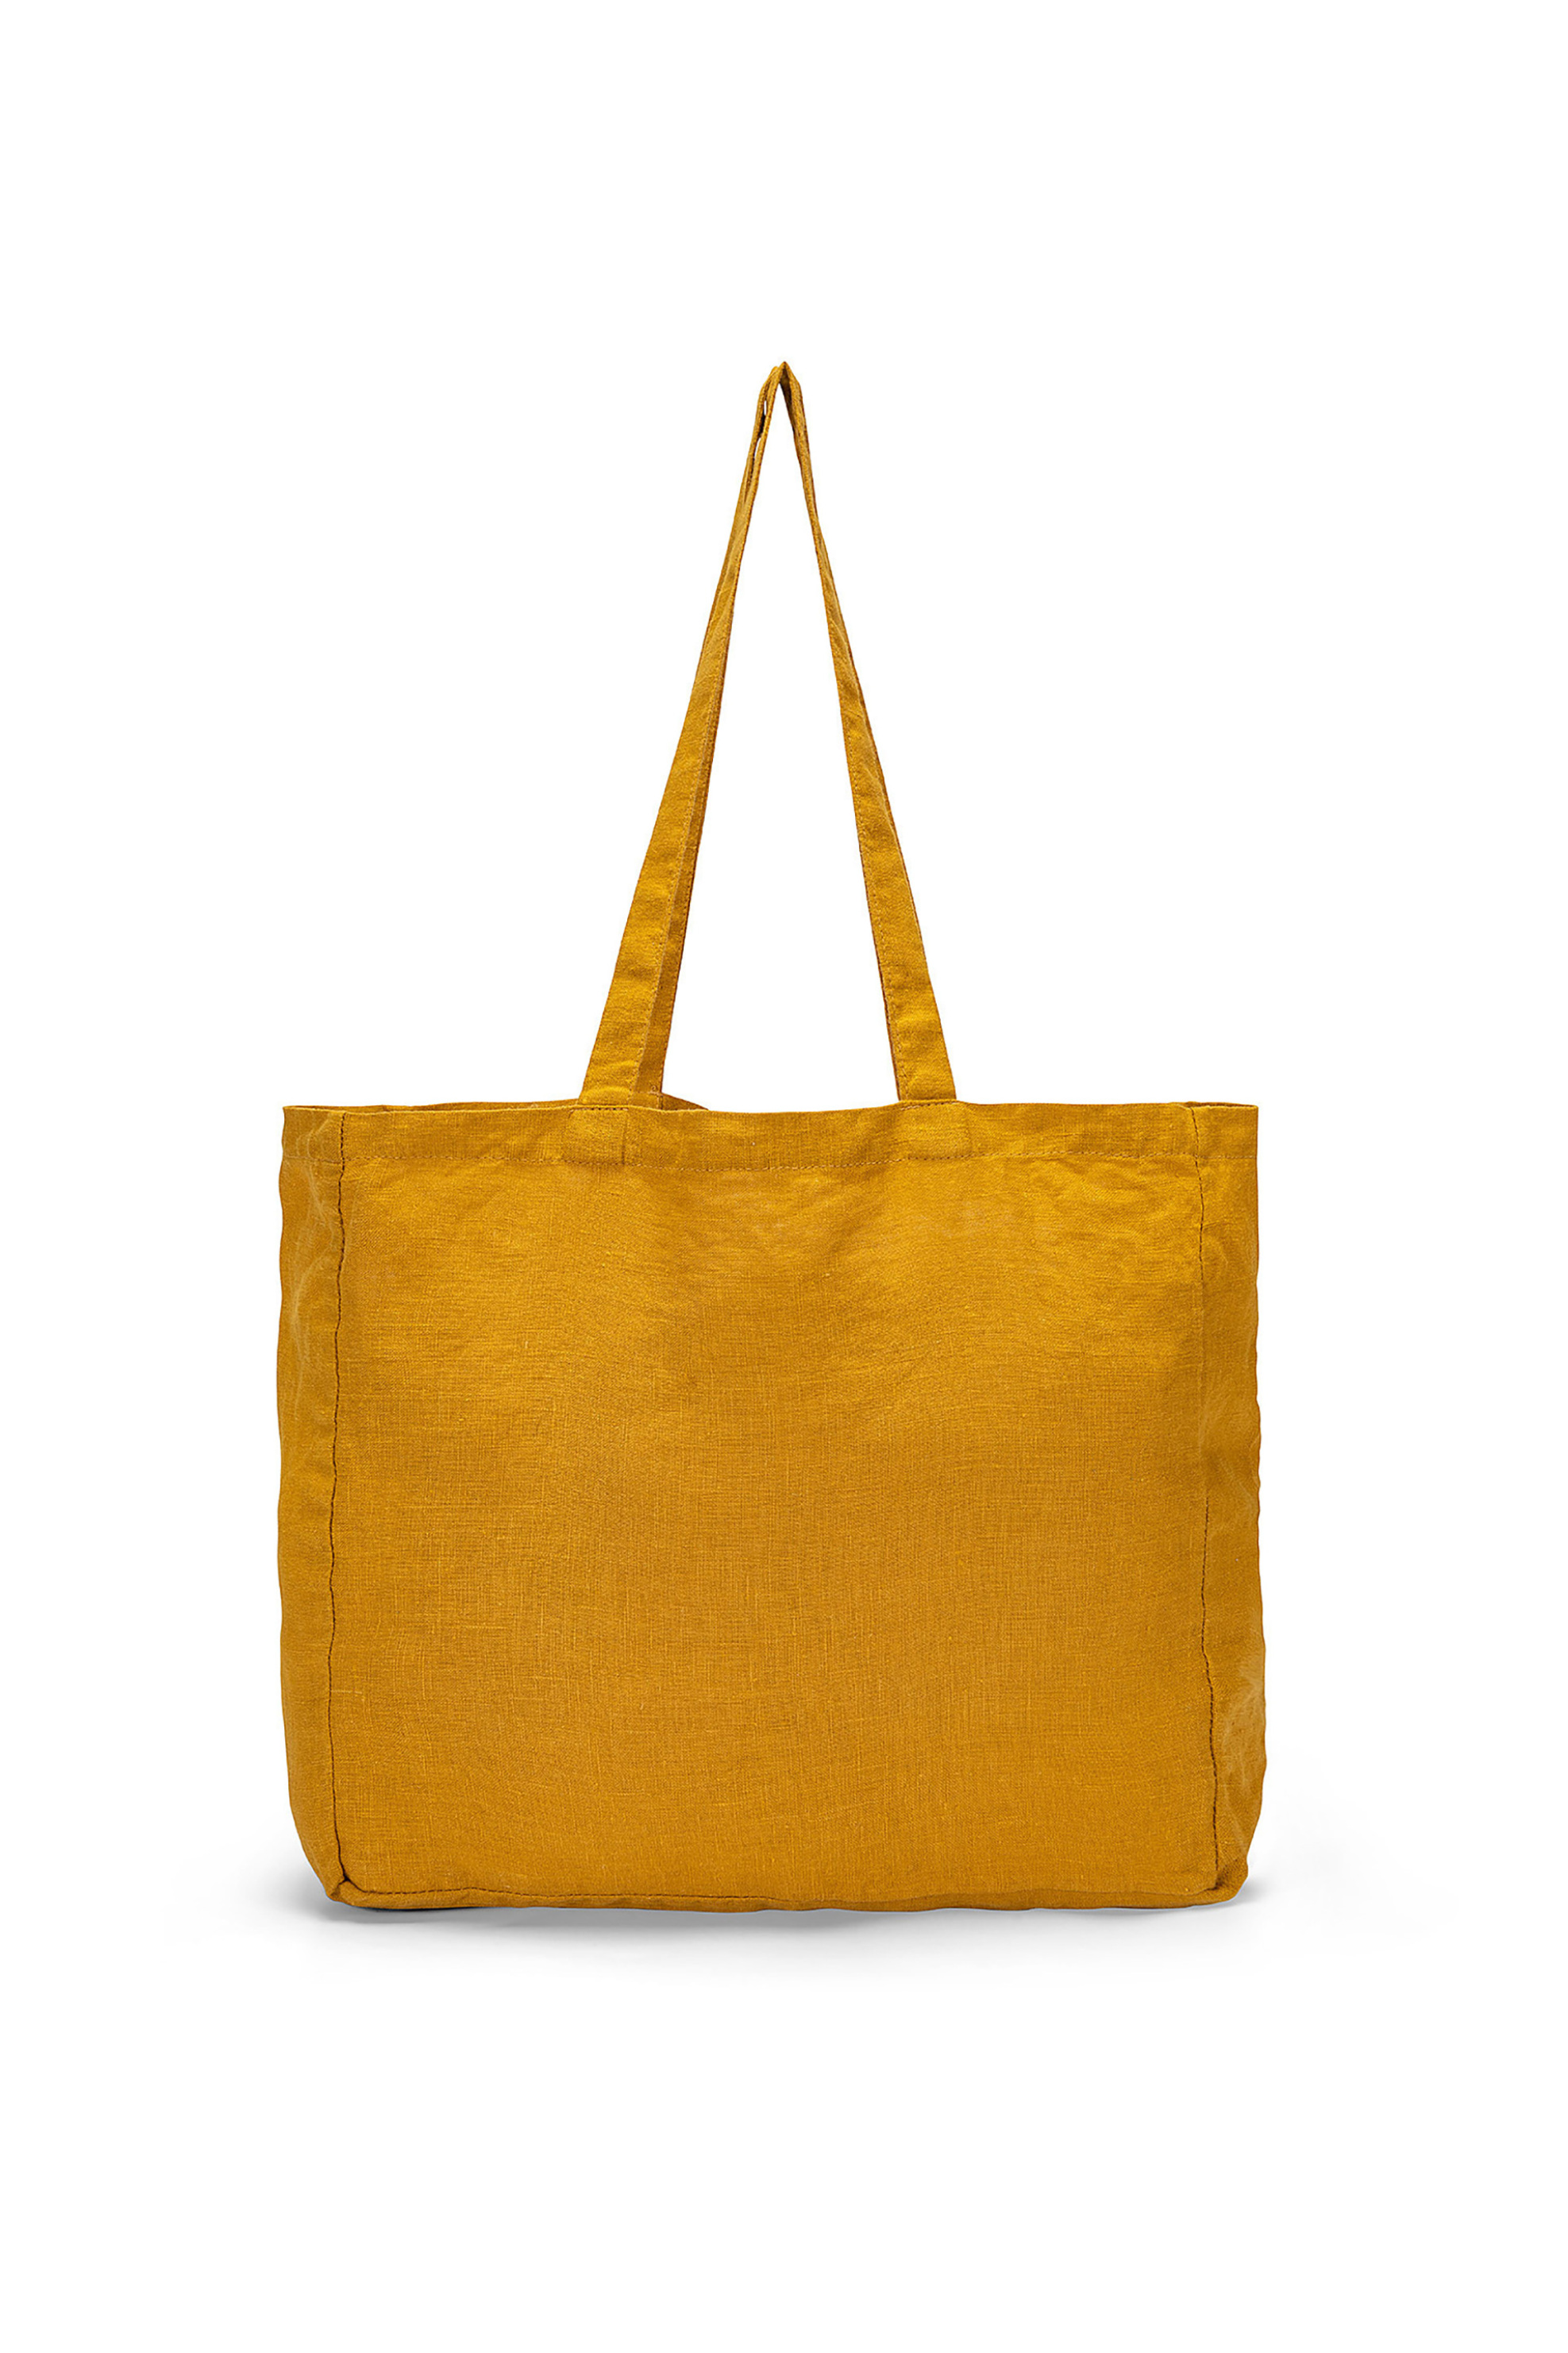 Home > ΚΟΥΖΙΝΑ > Είδη μεταφοράς > Τσάντες για ψώνια Coincasa τσάντα για ψώνια μονόχρωμη "Linen Joy" 35 x 35 x 10 cm - 007219375 Κίτρινο